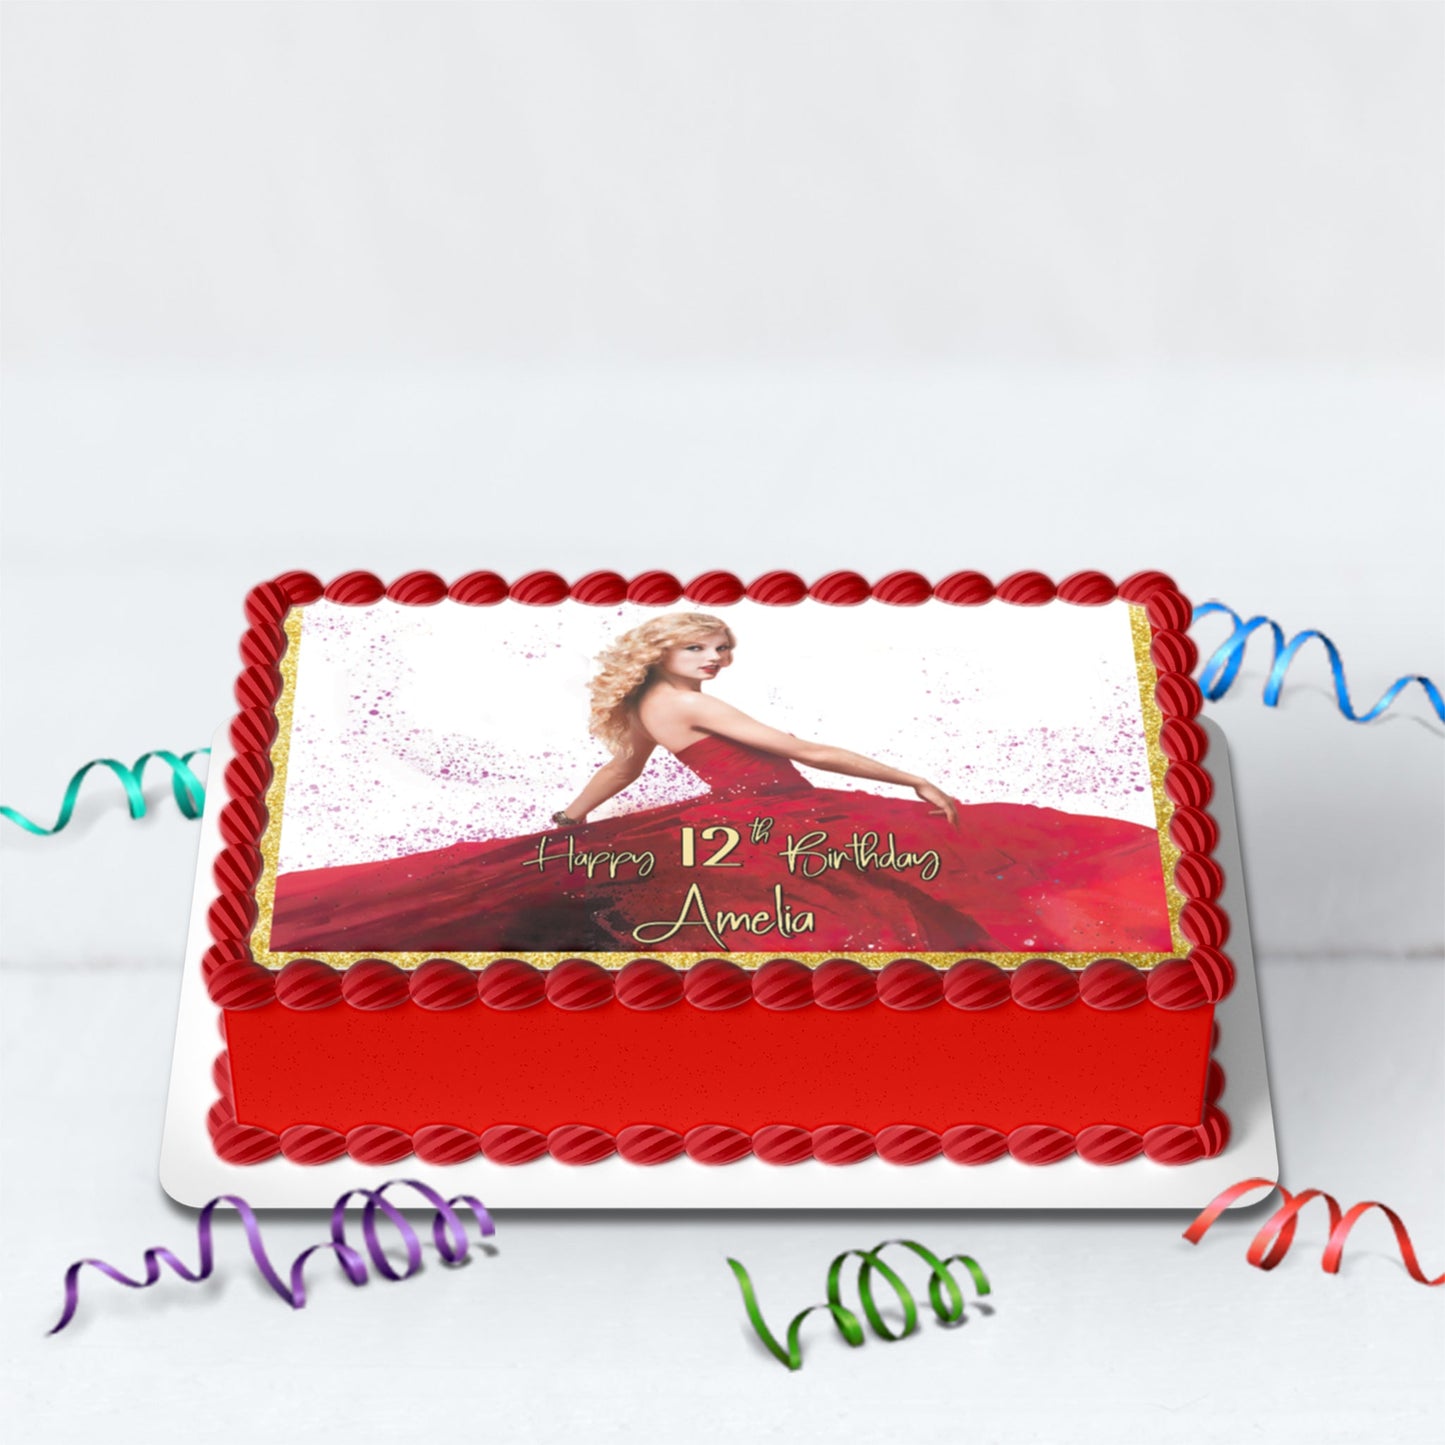 Taylor Swift Birthday Decorations, Eras Tour Party Supplies, Taylor Swift, Taylor Swift, Taylor Swift SVG